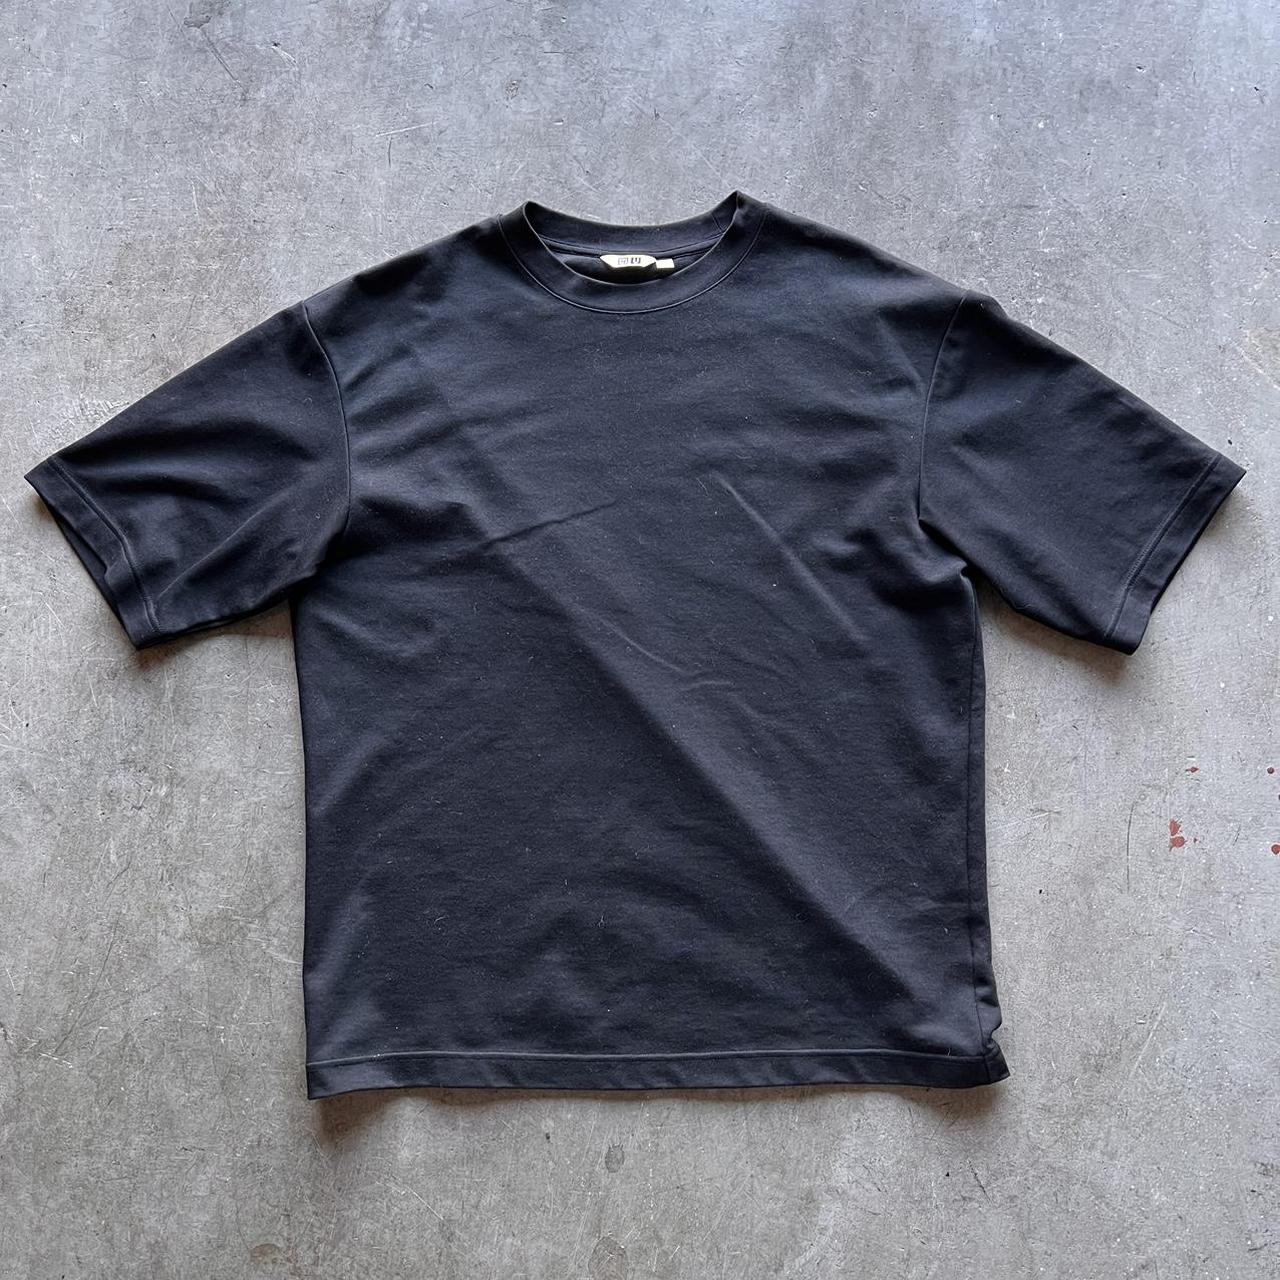 Black Uniqlo u airism t shirt size medium - Depop